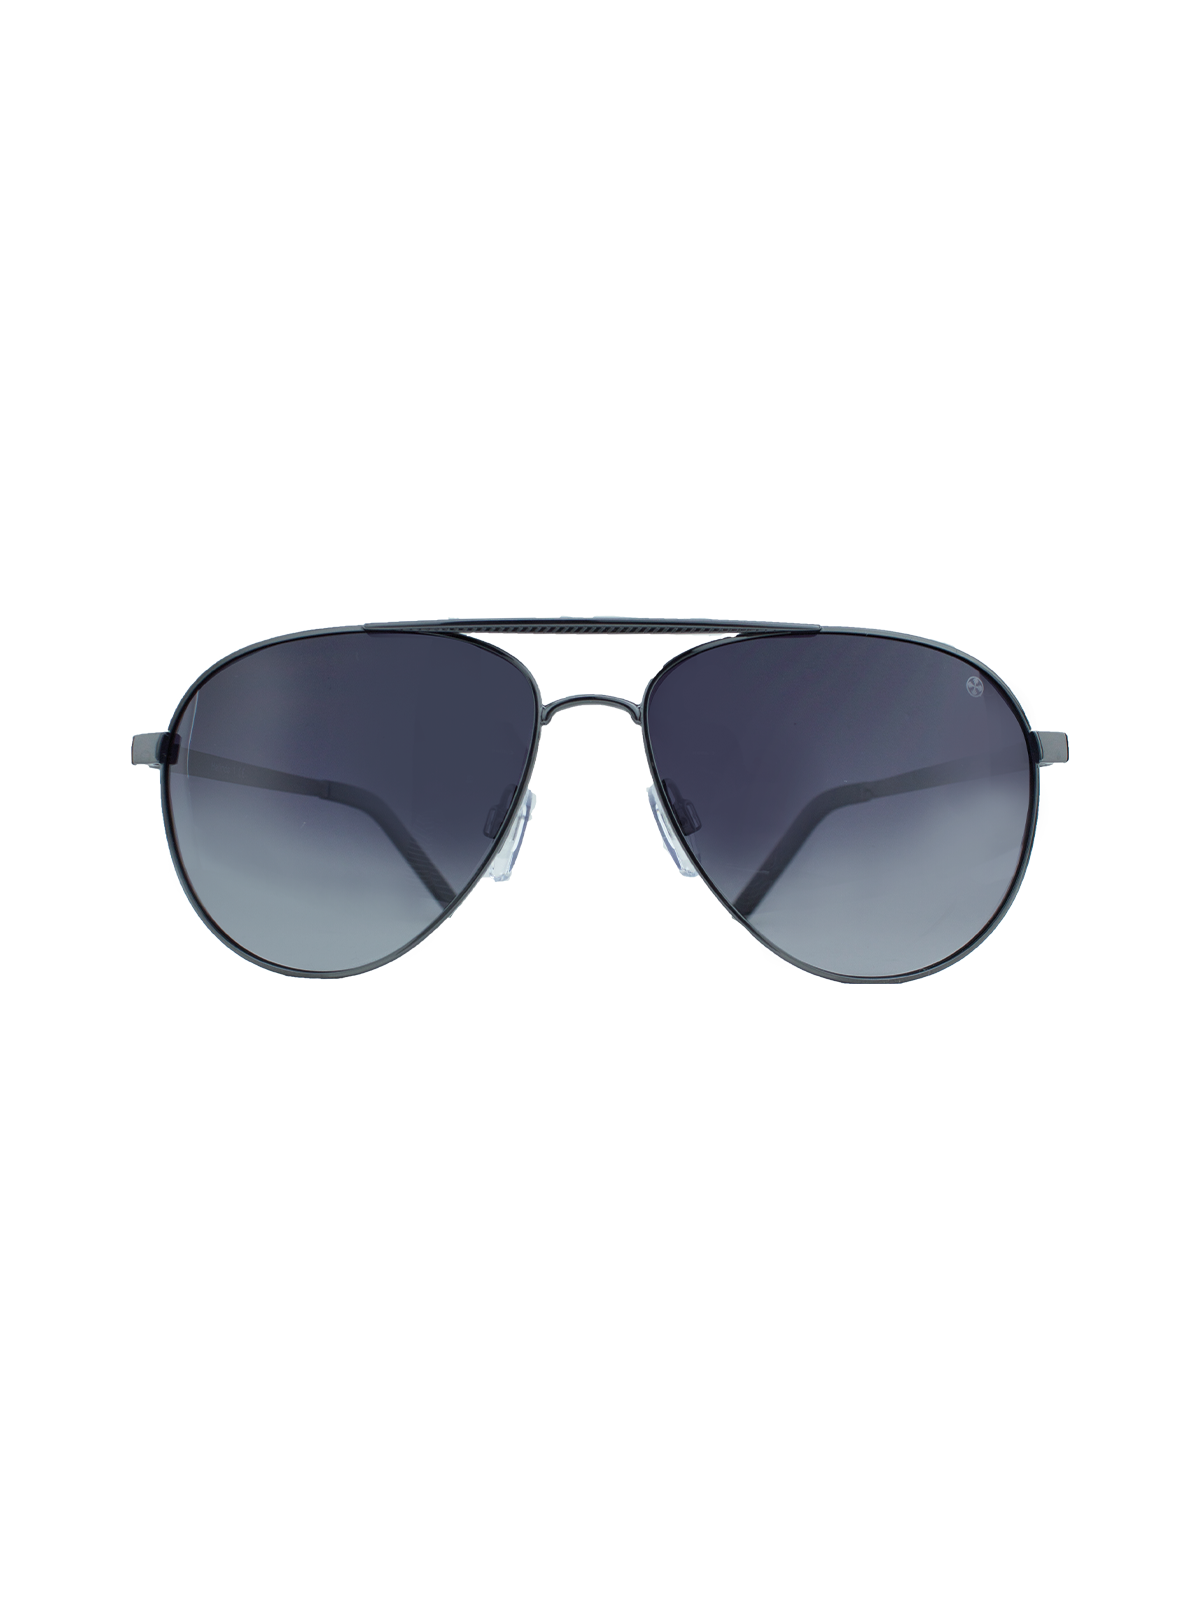 Helindo 1 Men Sunglasses | Grey